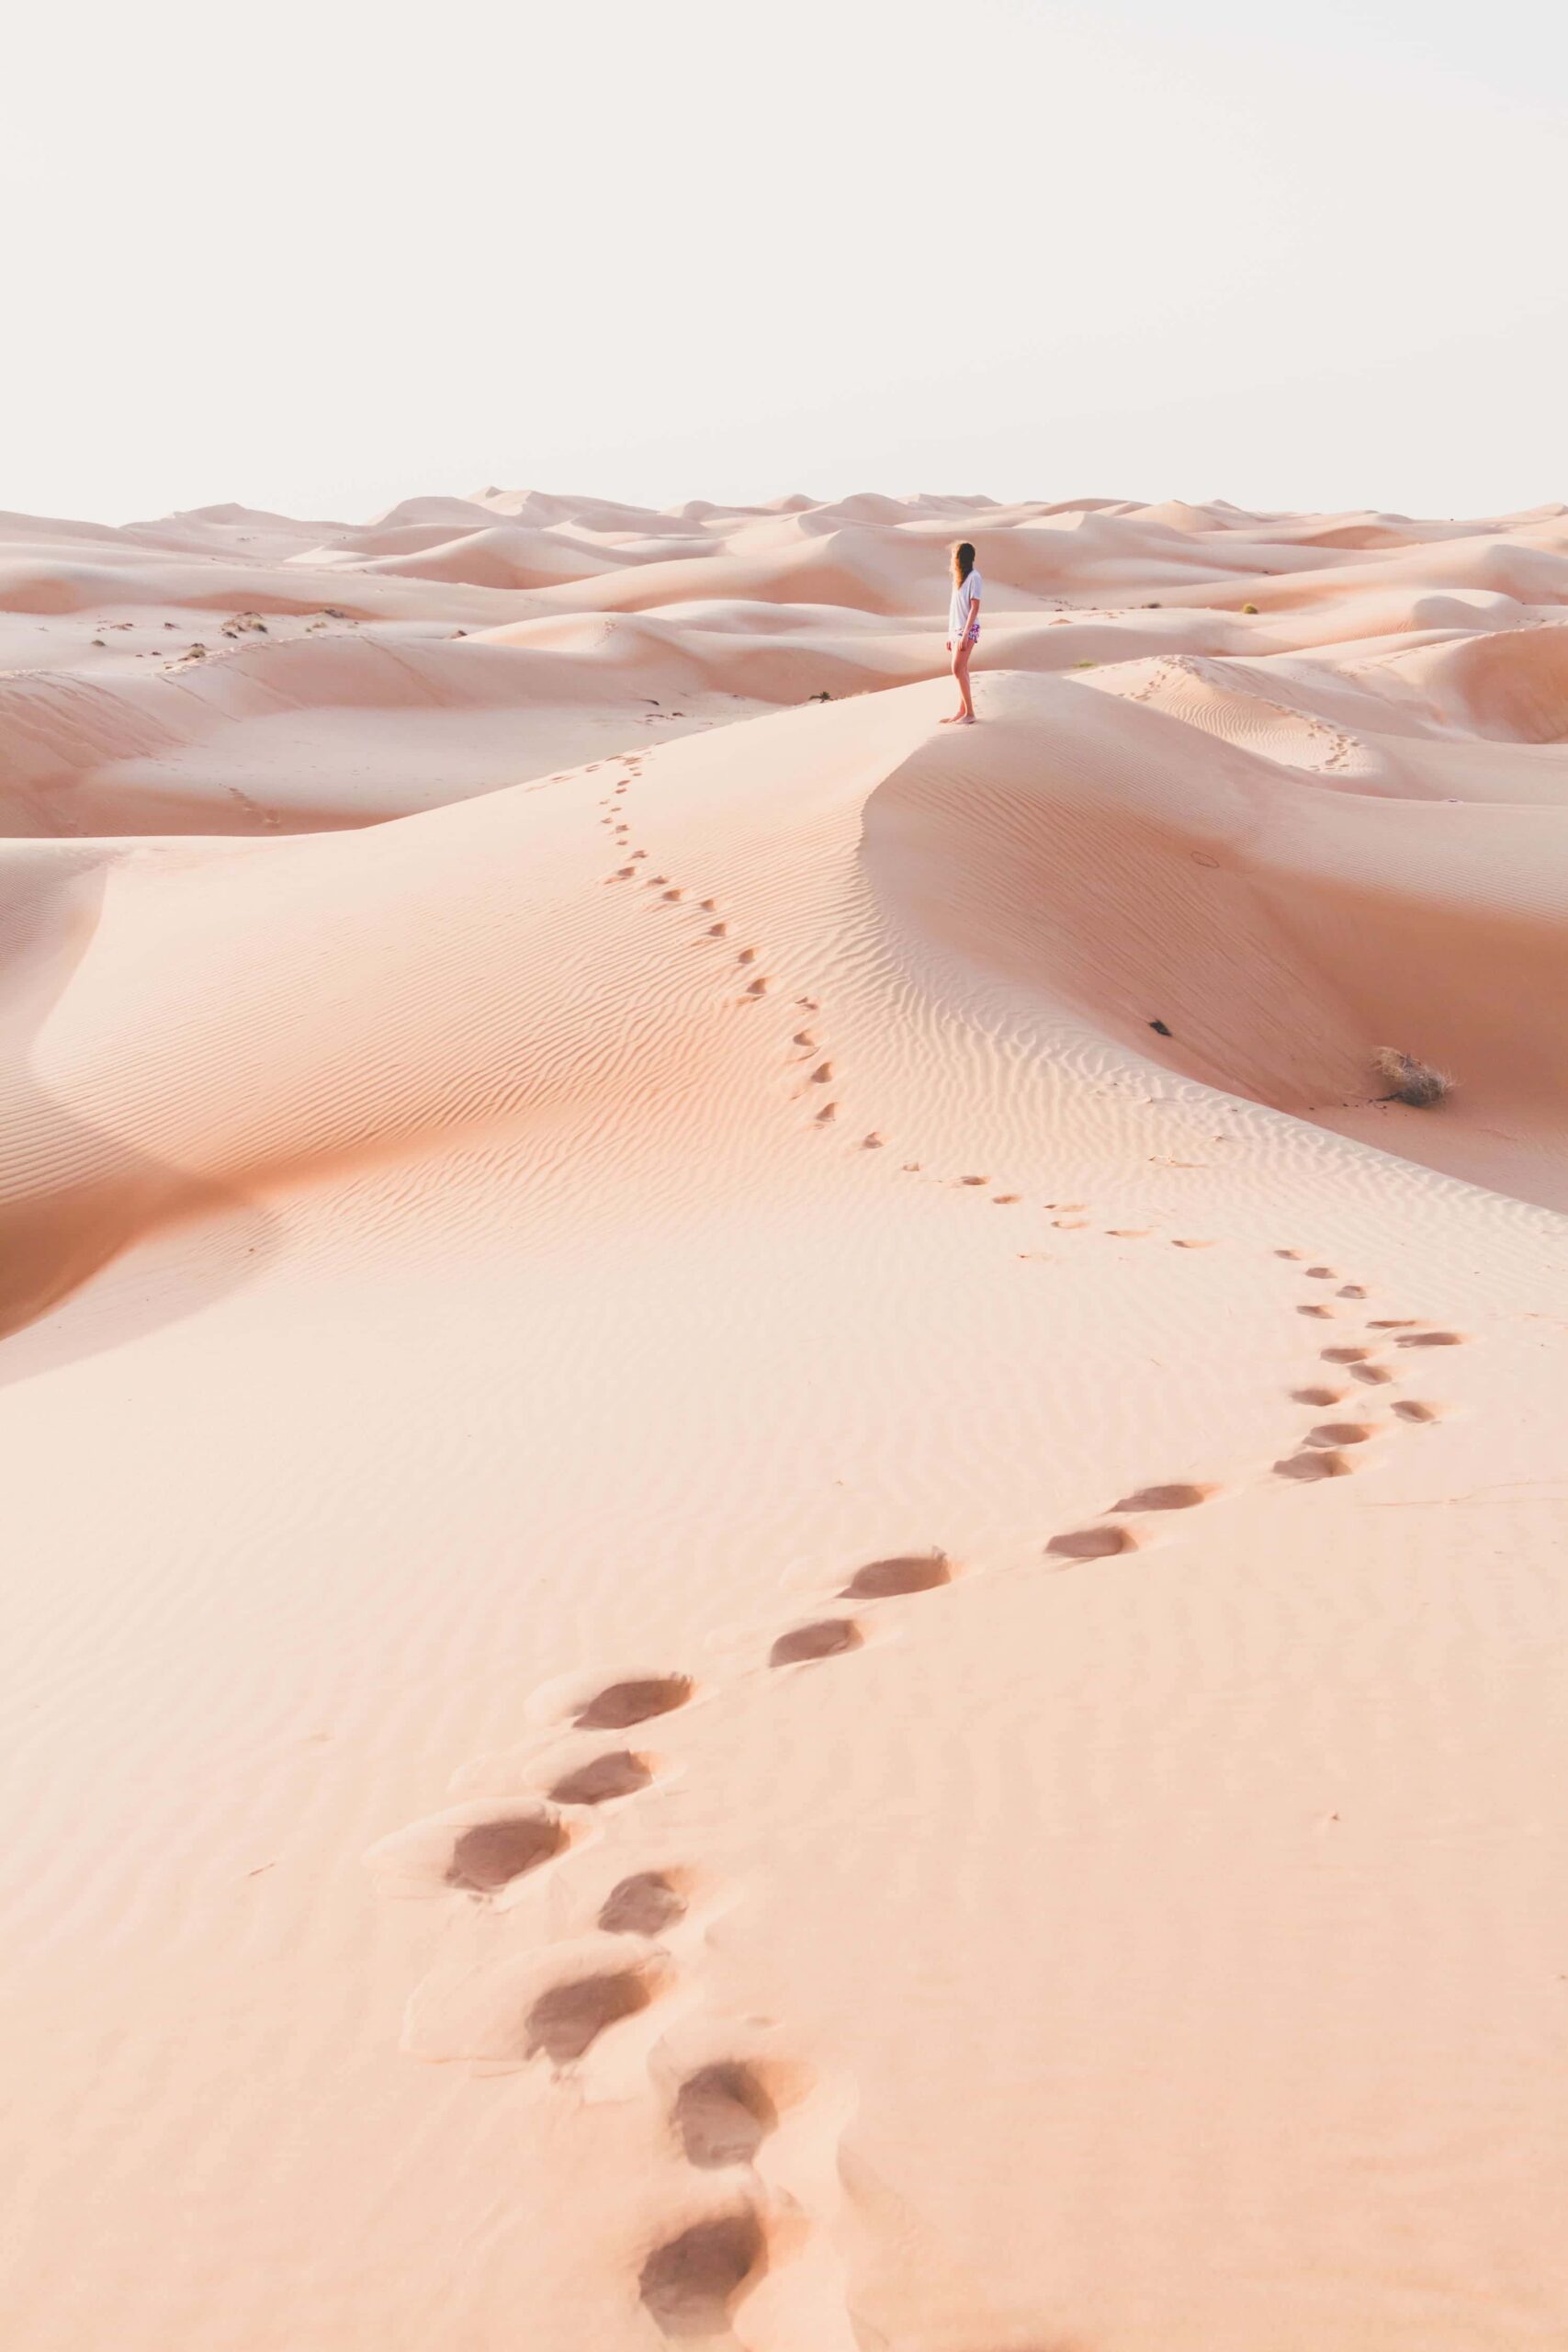 Blonde female Caucasian traveler leaving footprints in sand dunes when walking in dessert in Oman 67 1 min 1 scaled